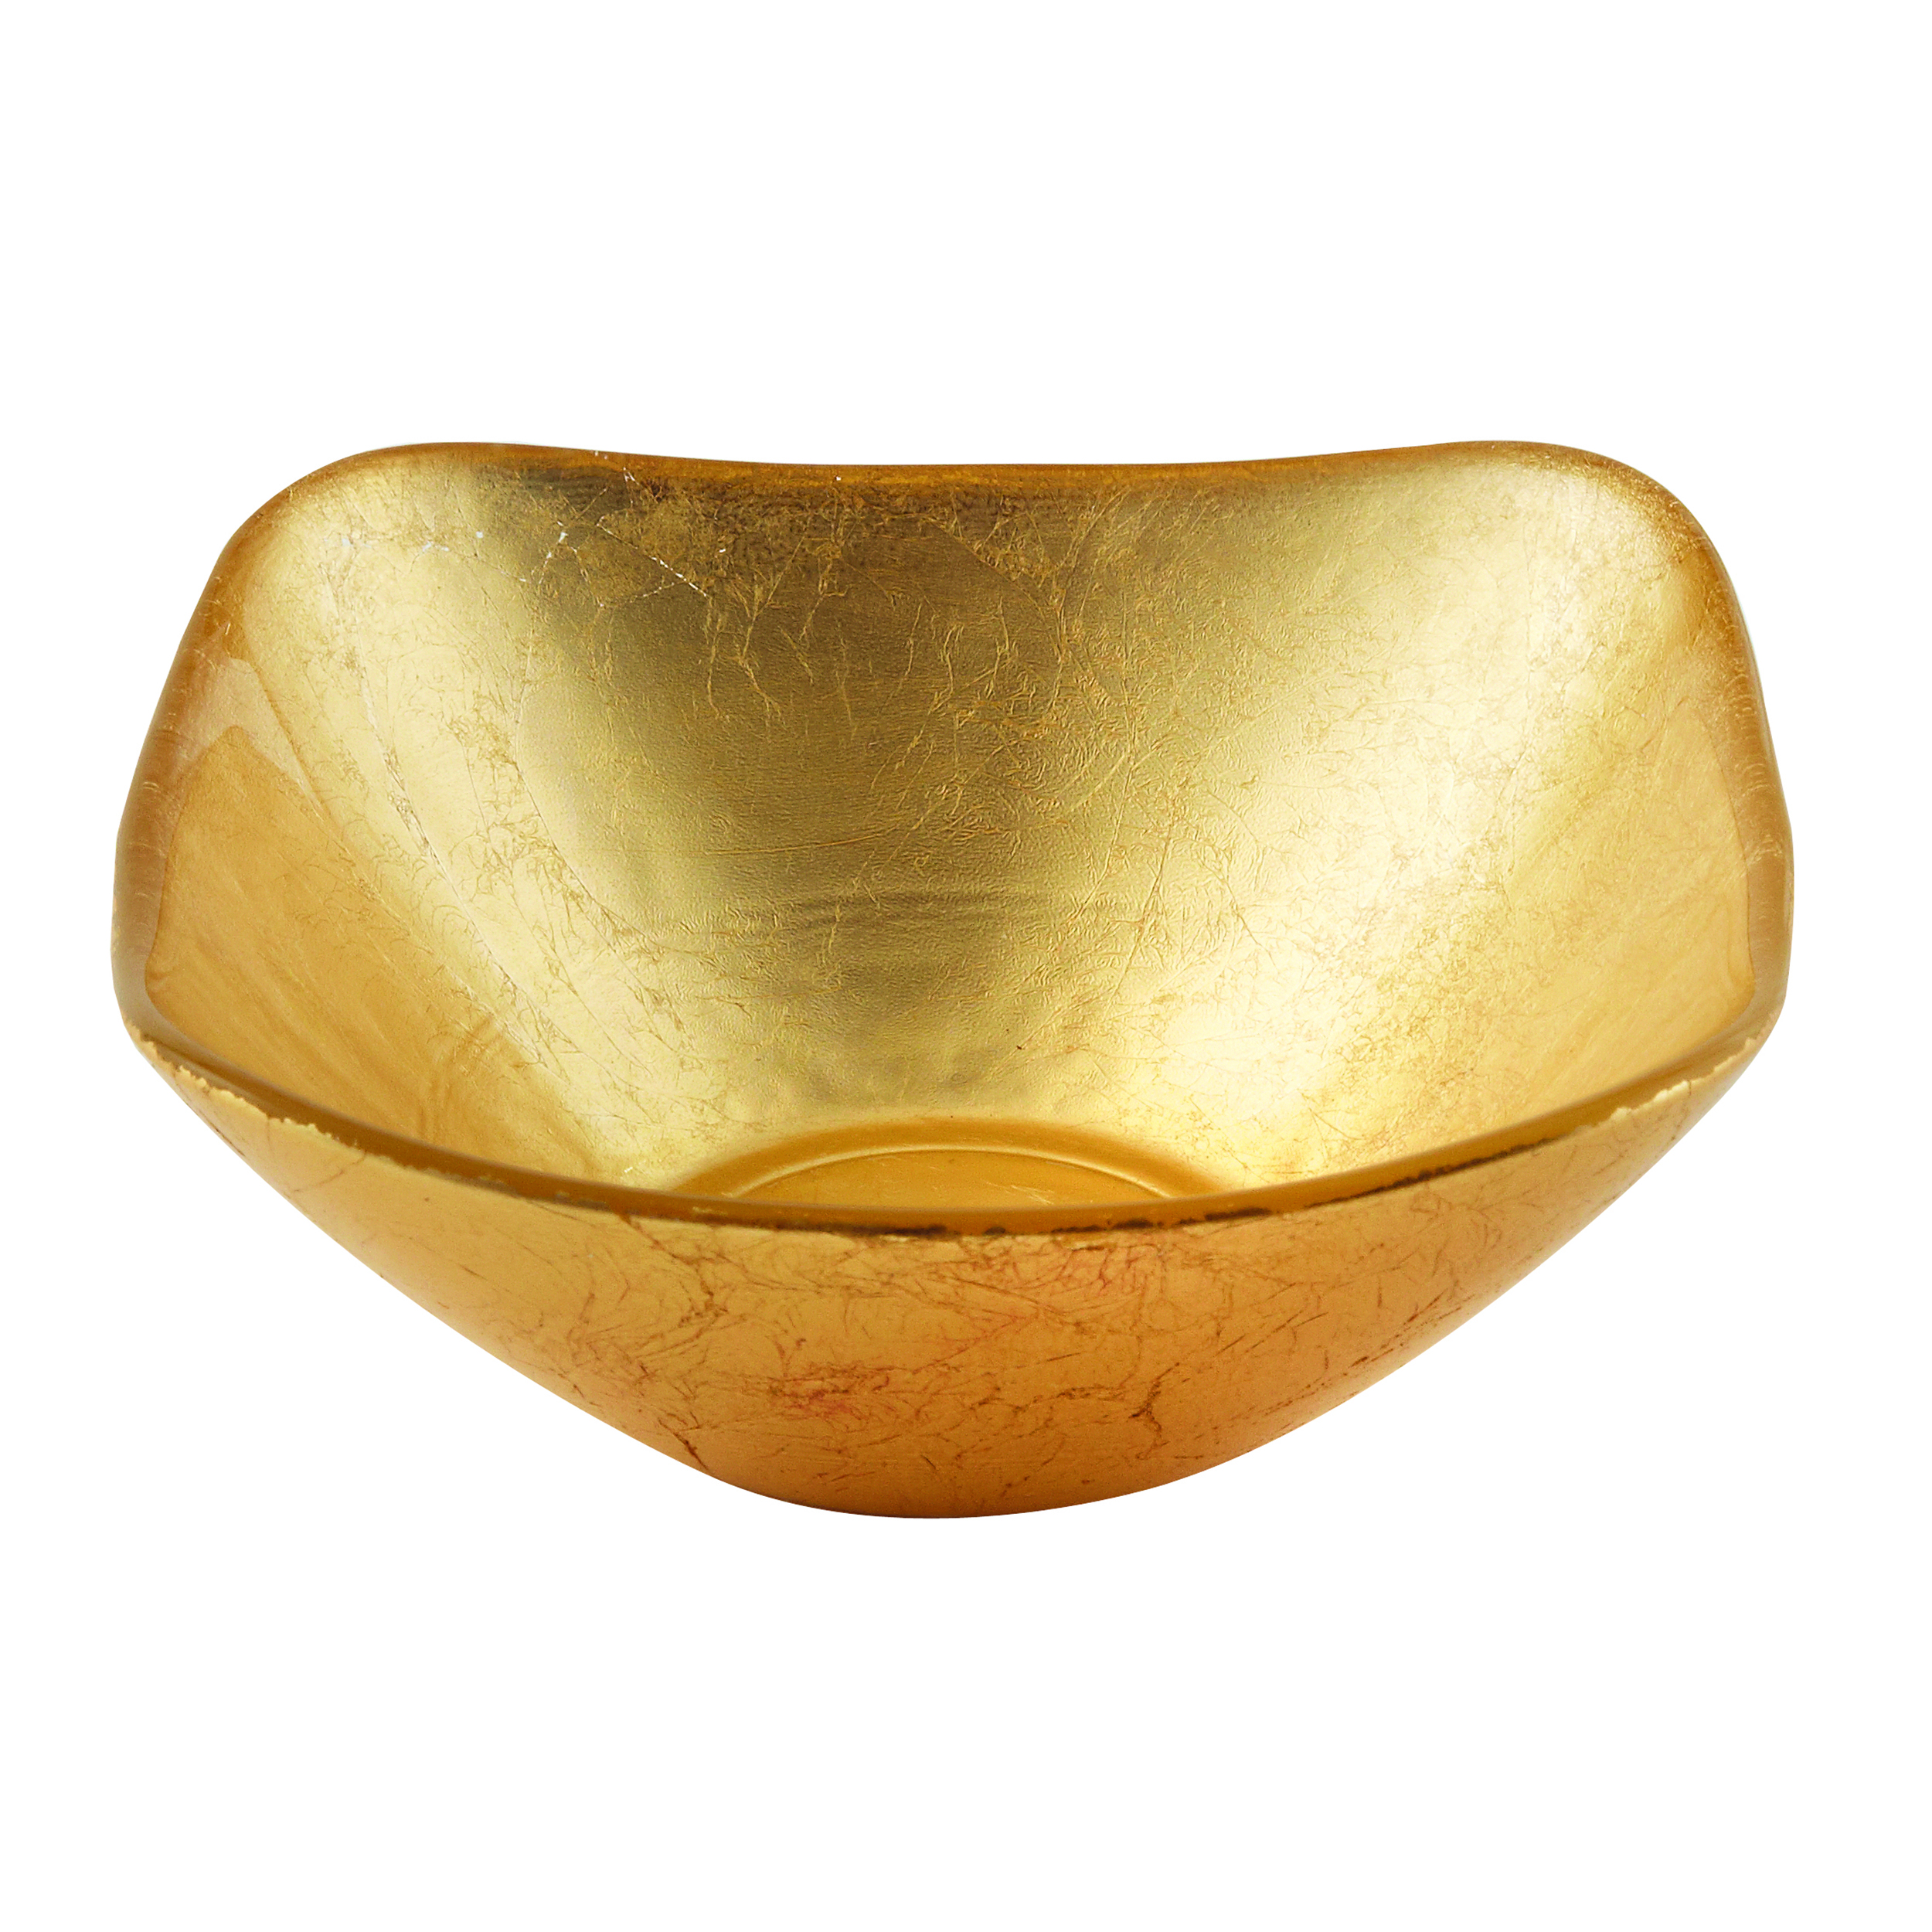 Atlas square gold glass bowl, 5" - Item # 5898